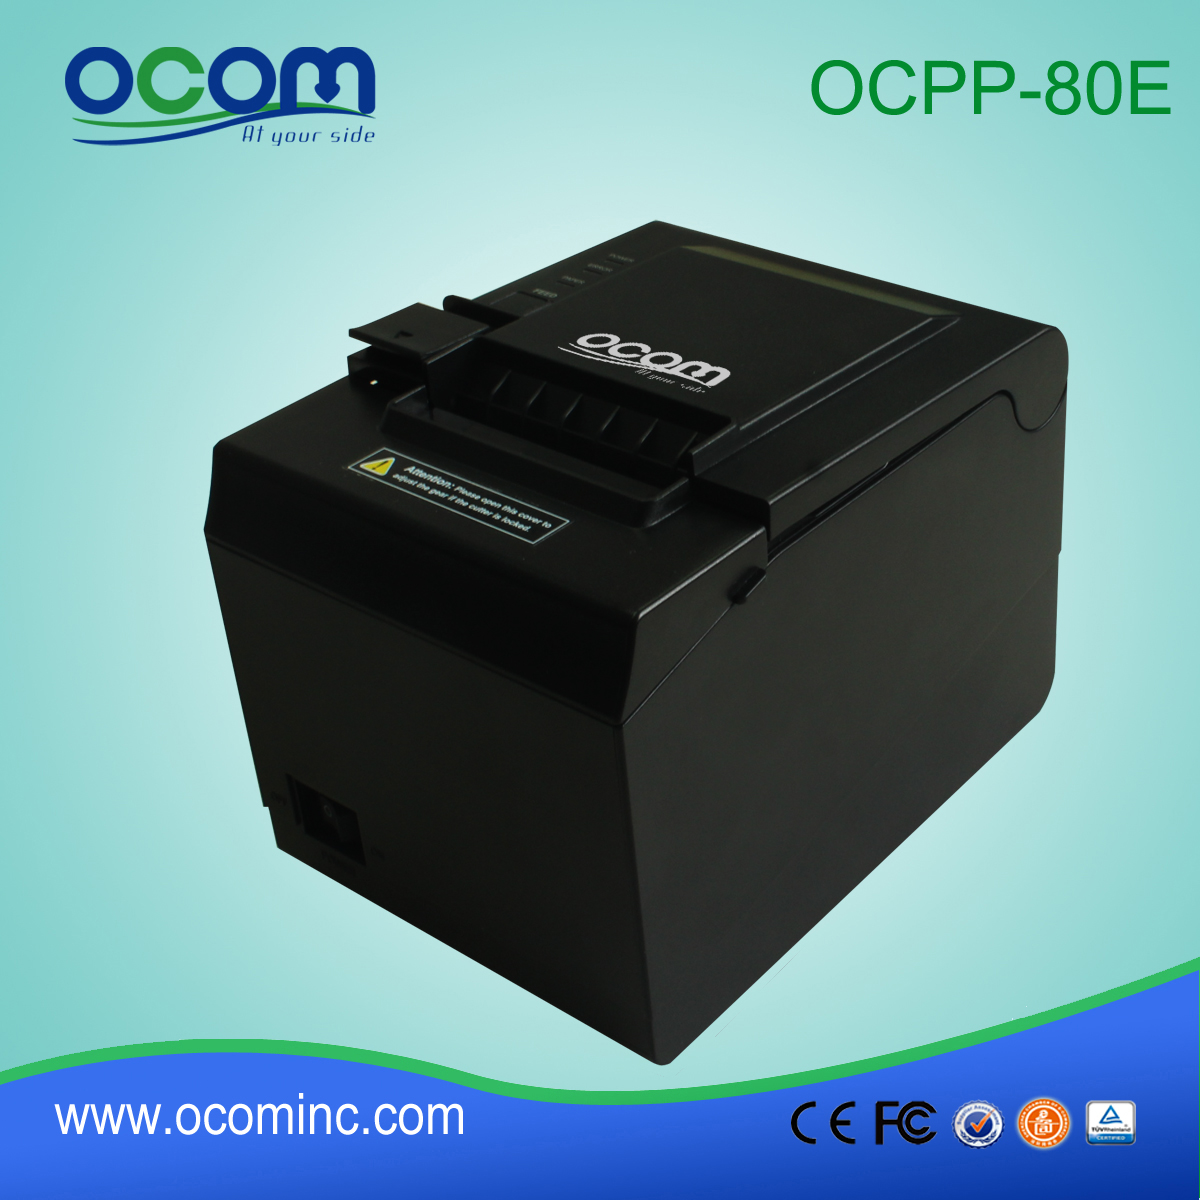 OCPP-80E λεωφορείο εισιτήριο εκτυπωτή epson barcode θερμικό εκτυπωτή 80mm